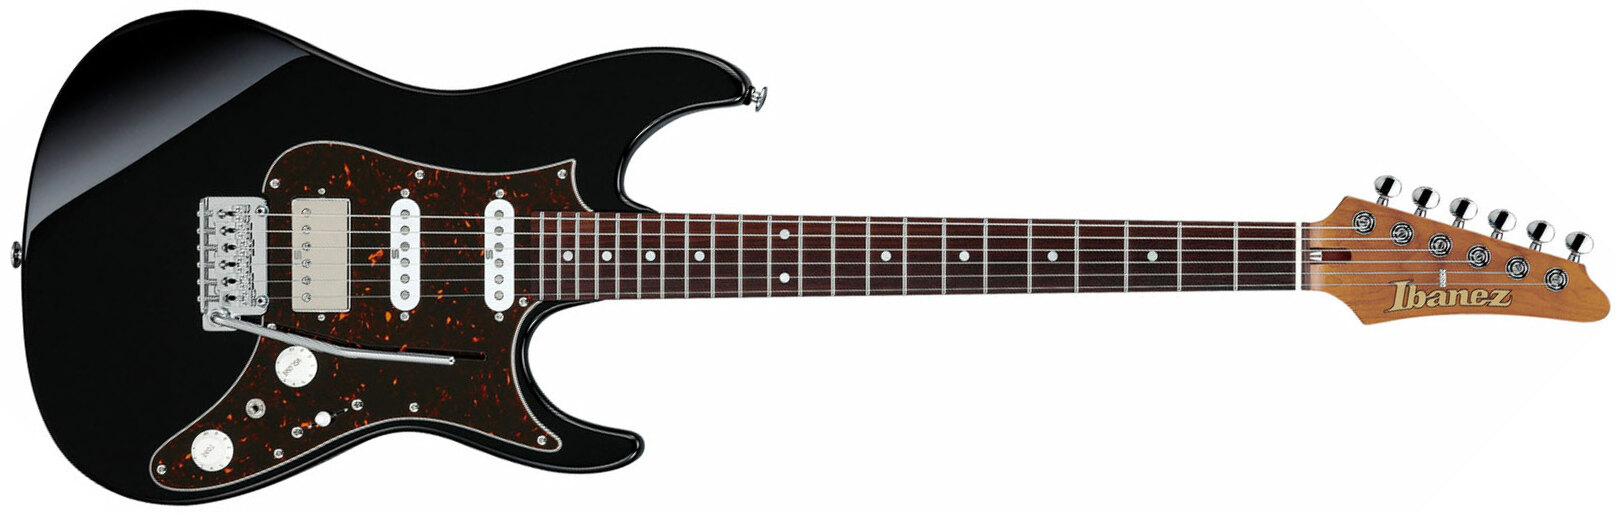 Ibanez Az2204b Bk Prestige Jap Hss Seymour Duncan Trem Mn - Black - Elektrische gitaar in Str-vorm - Main picture